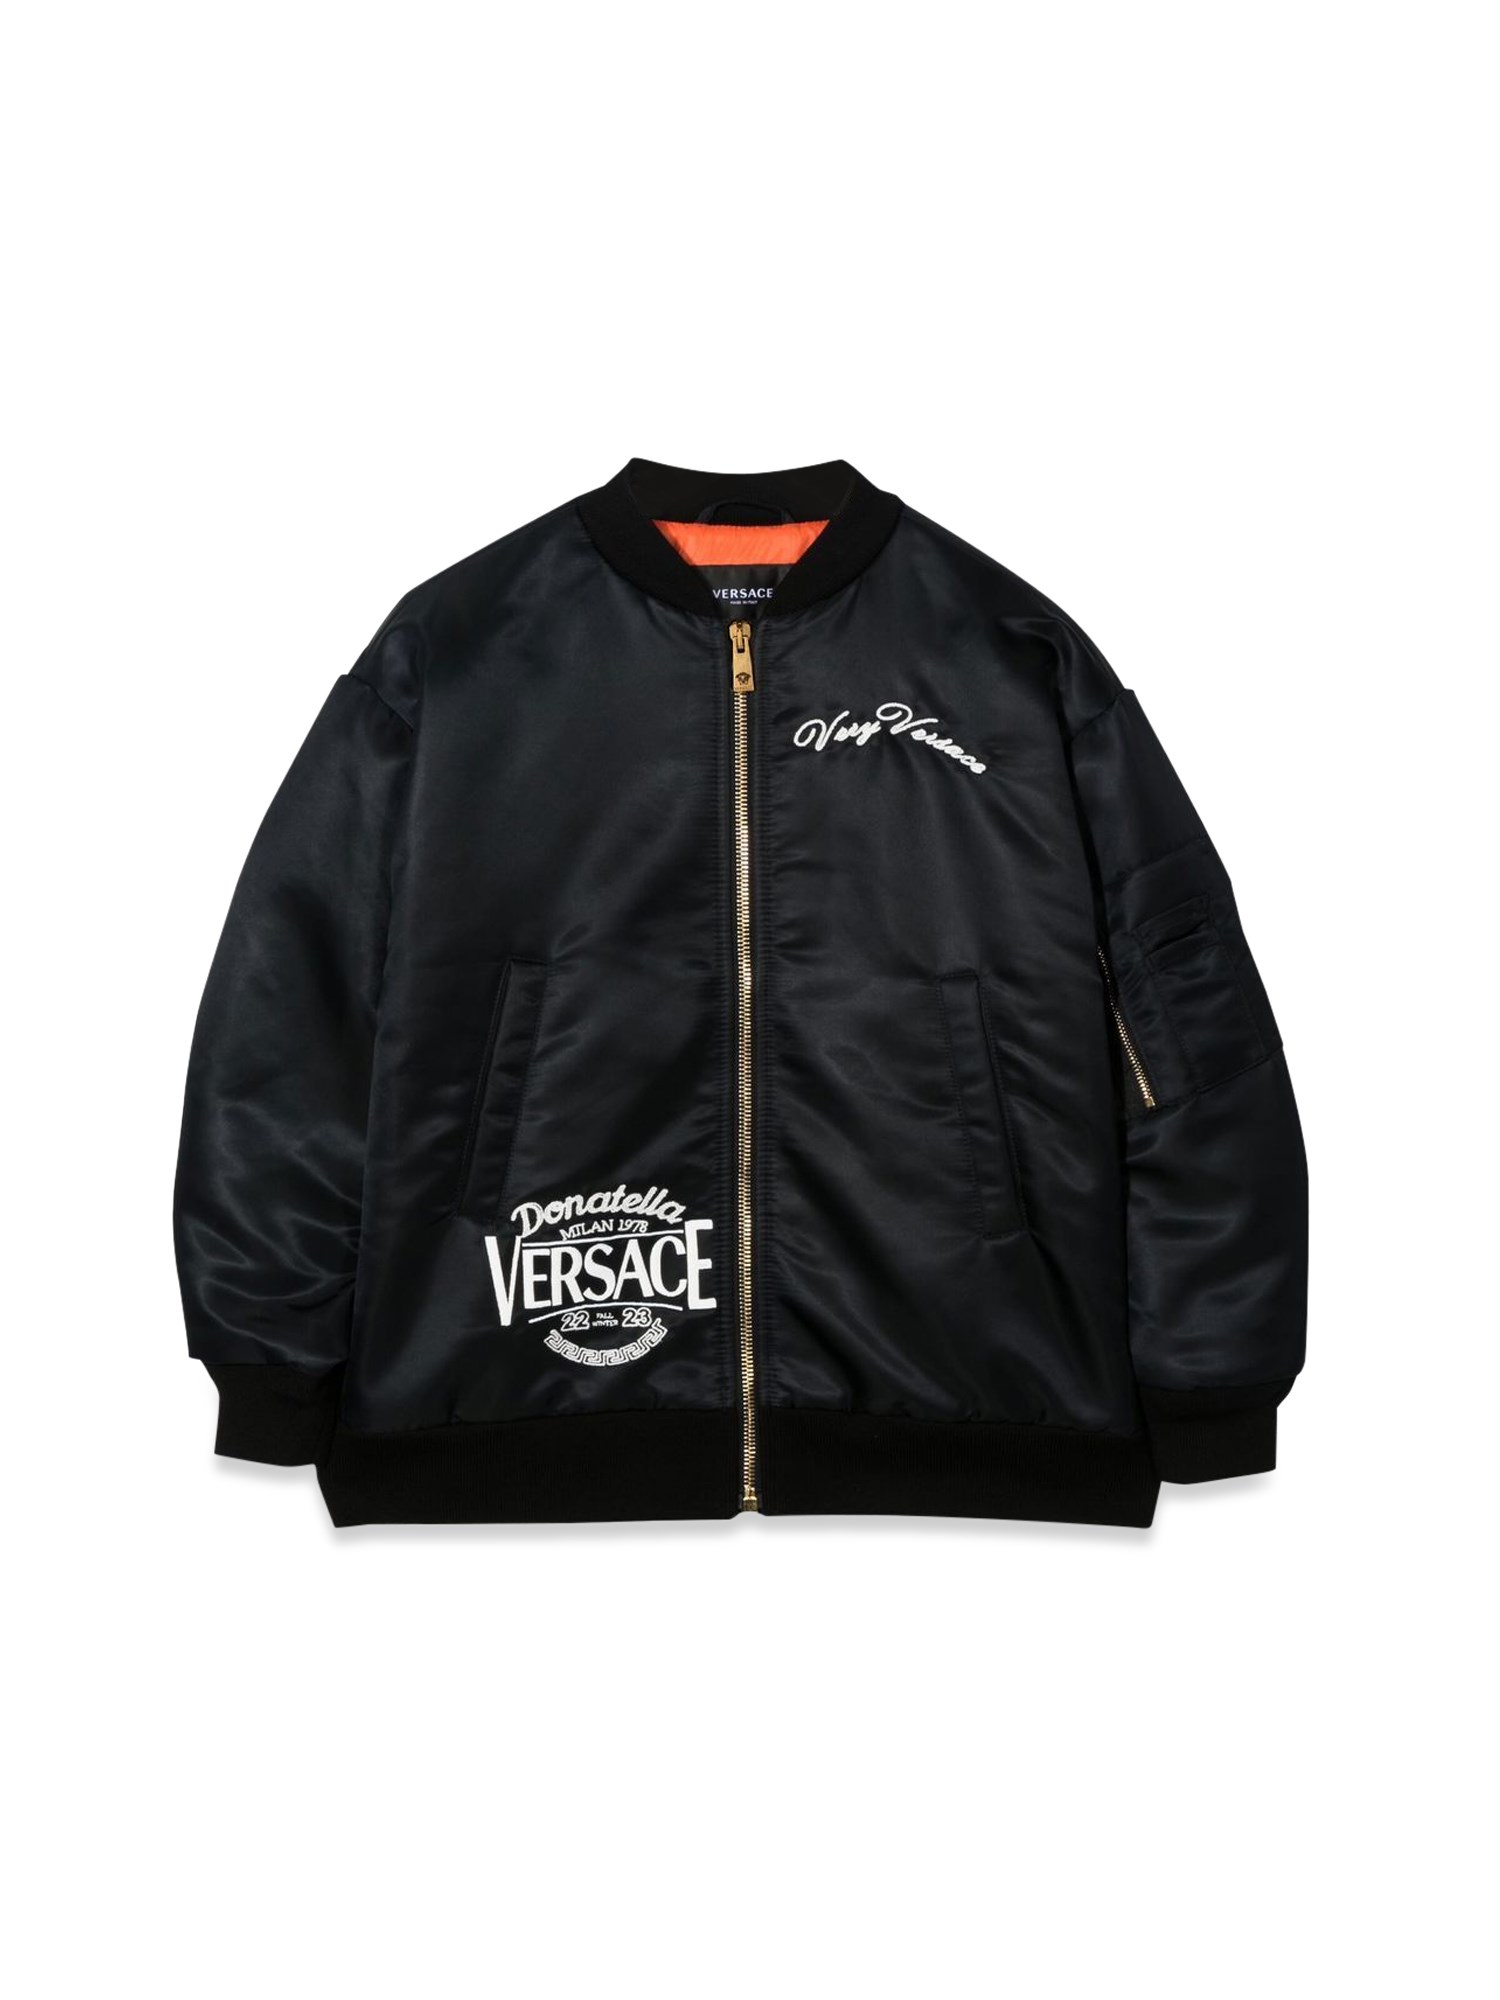 Versace versace donatella embroidery bomber jacket